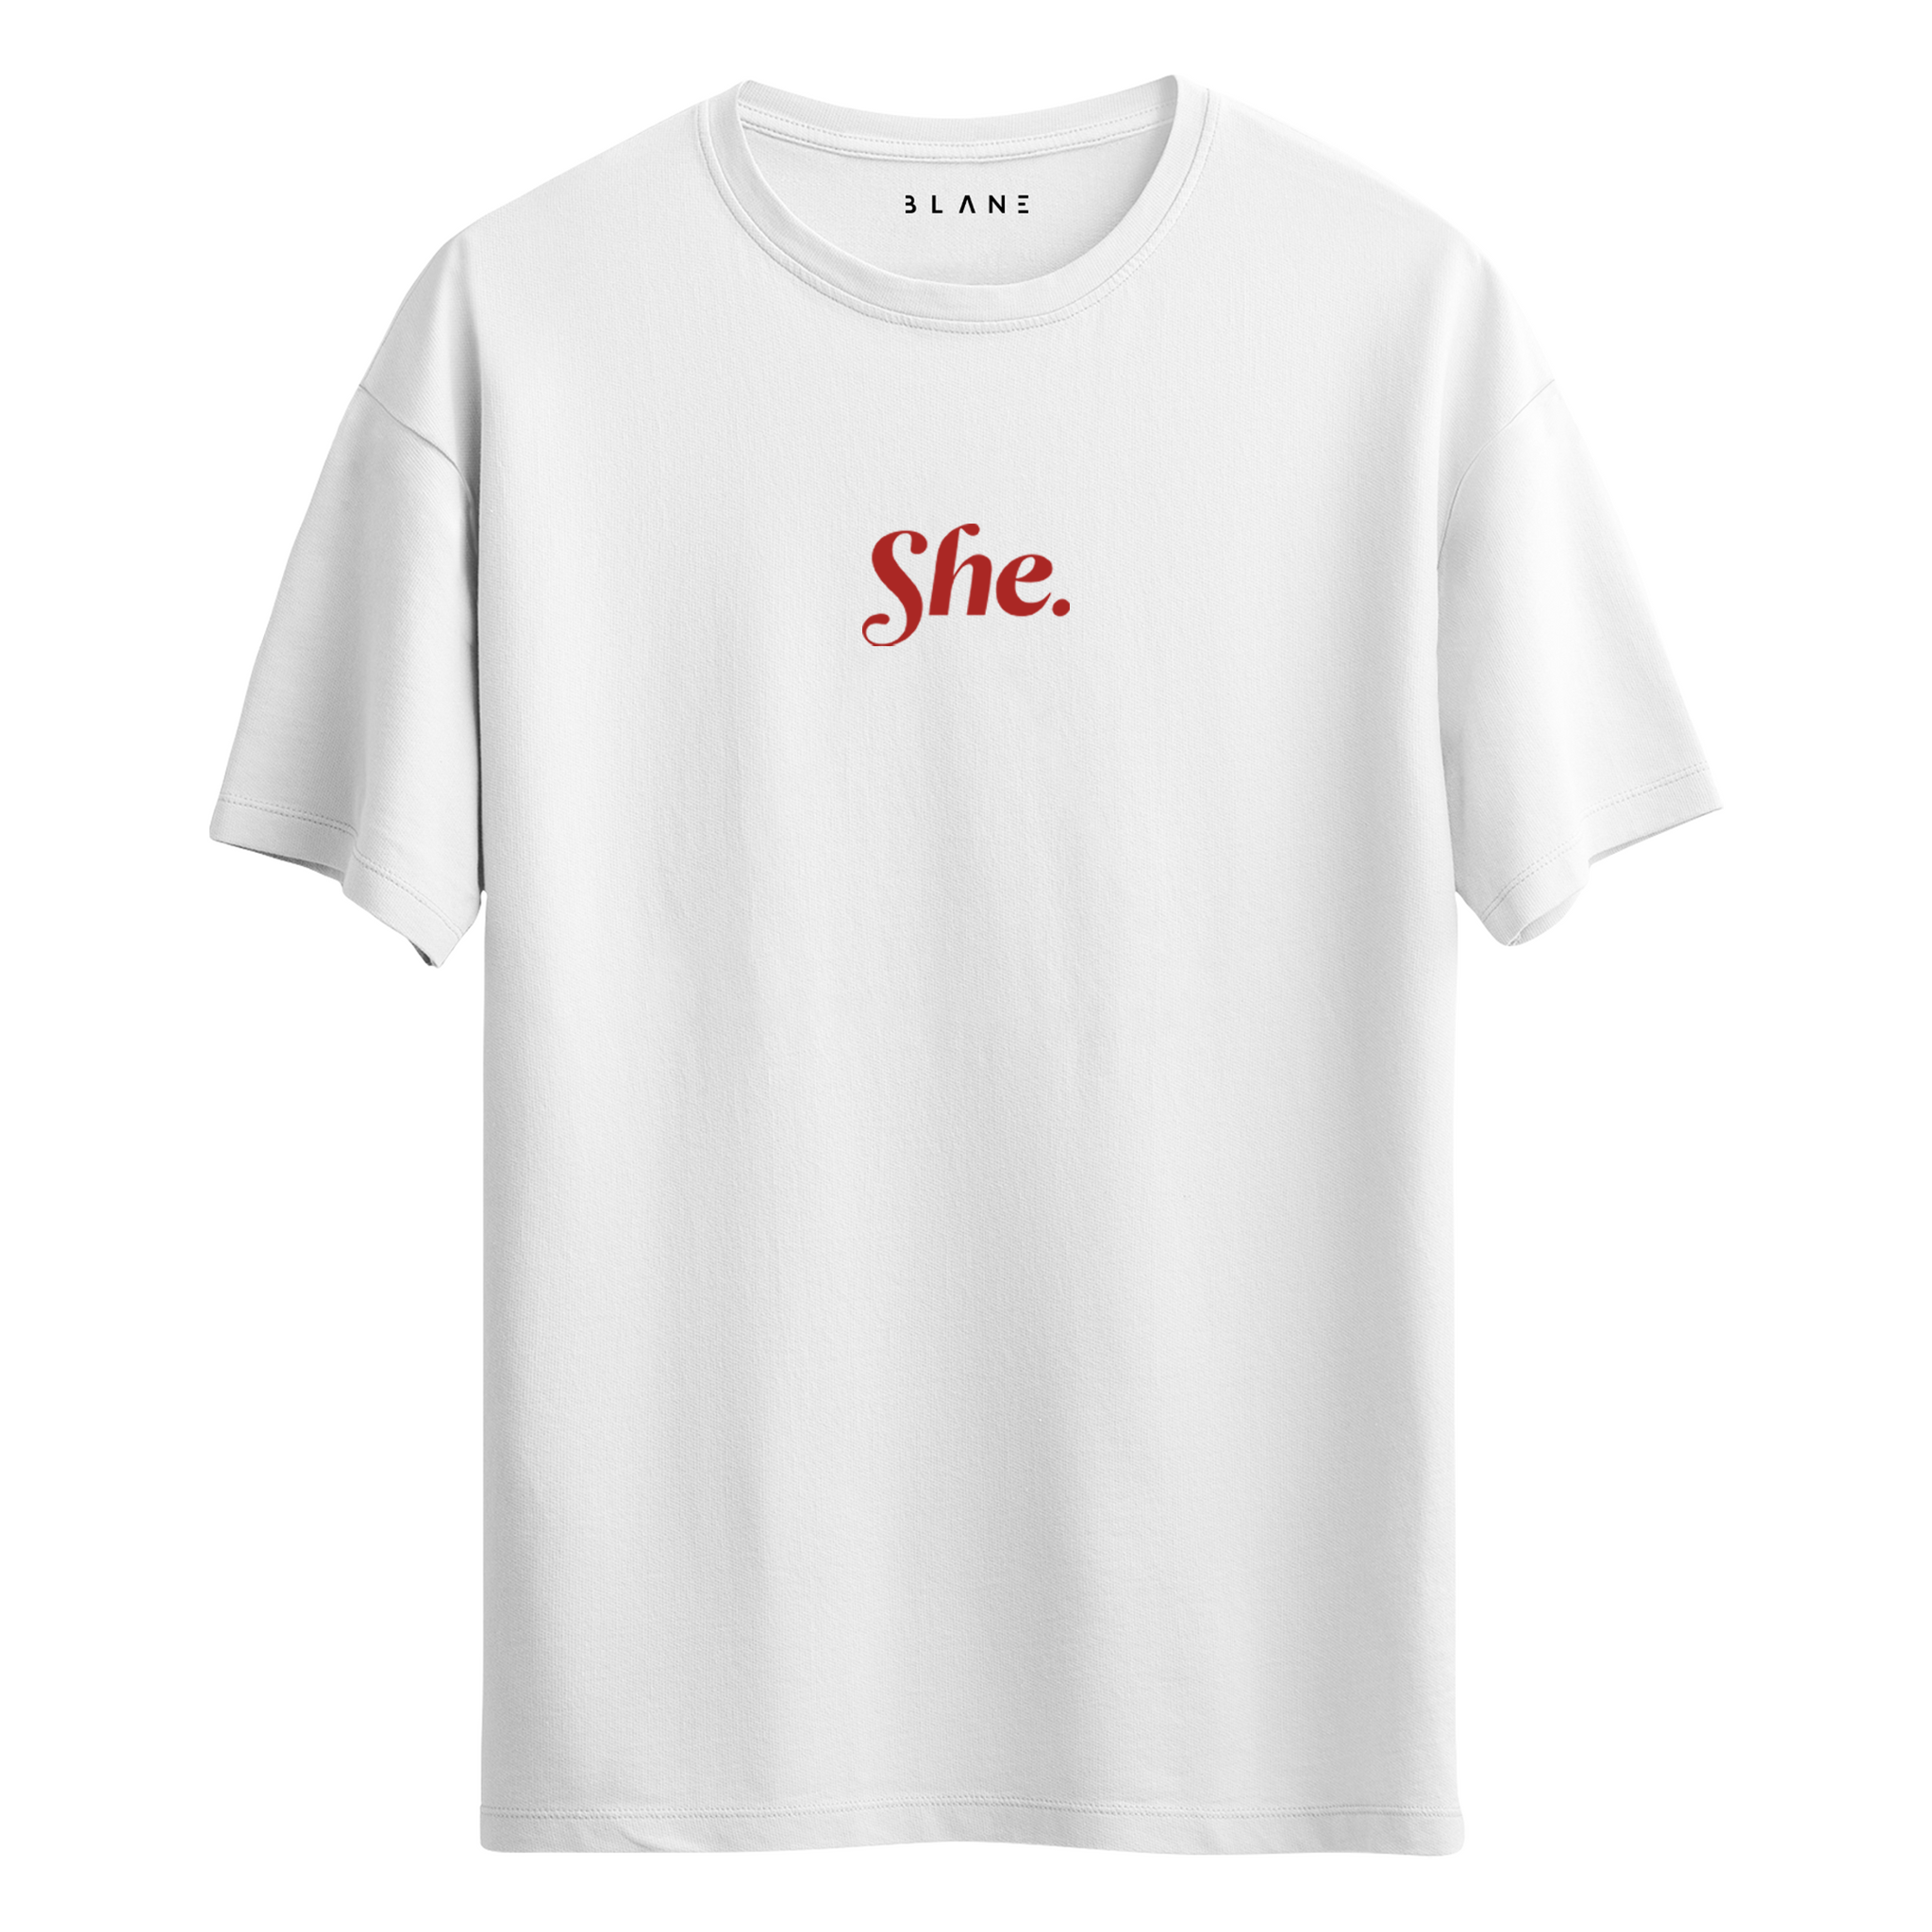 She - T-Shirt